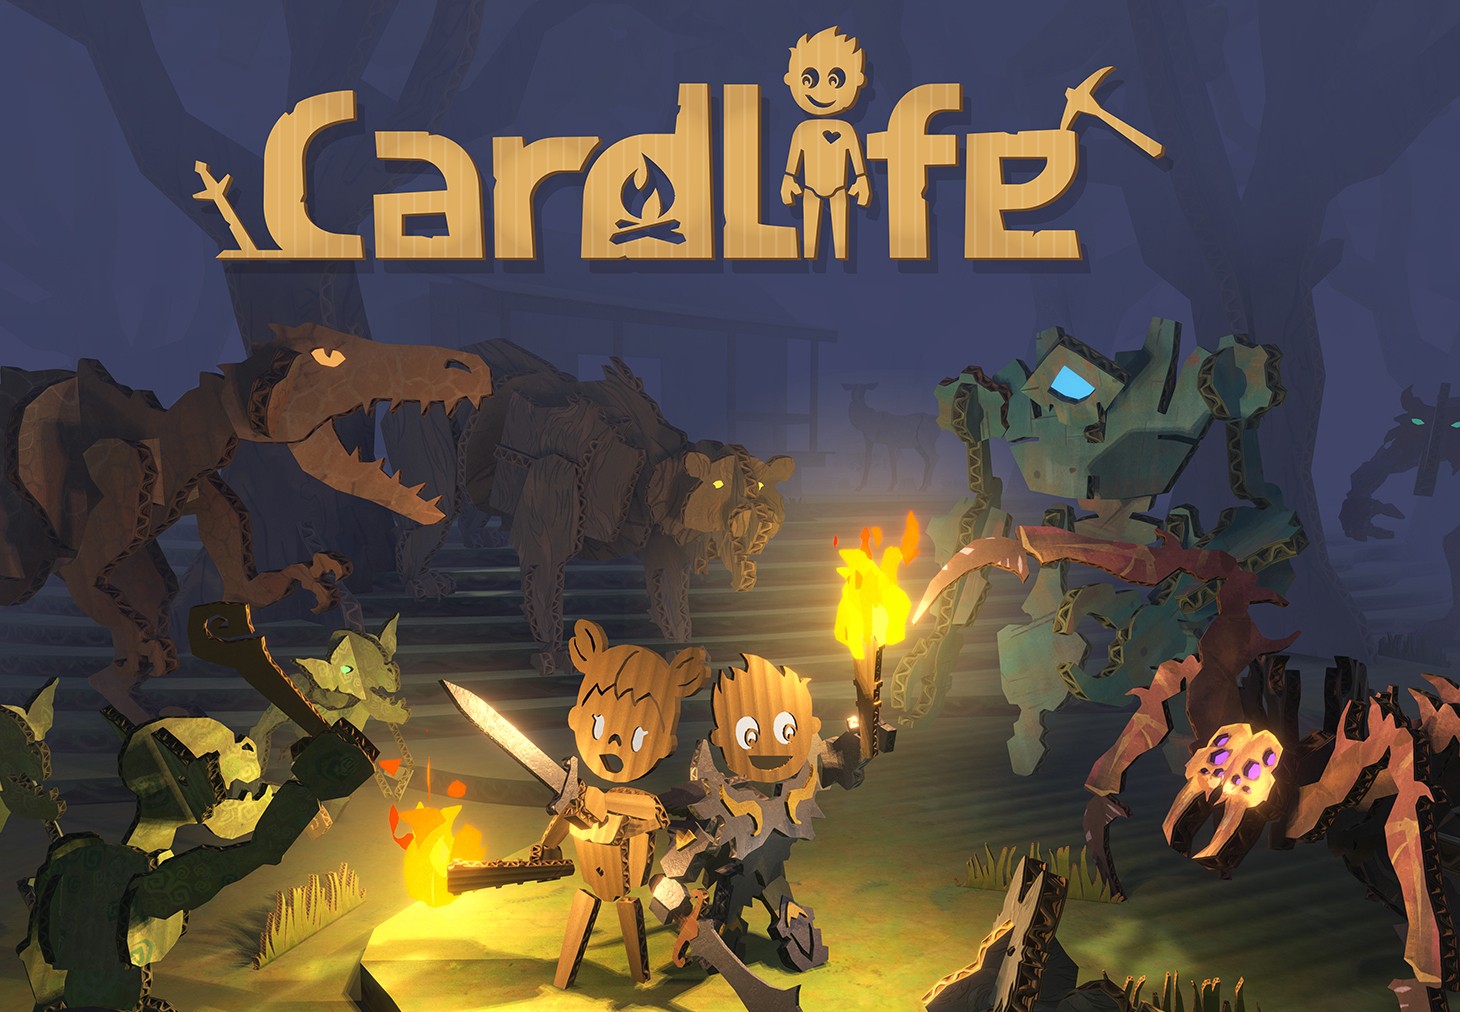 CardLife: Creative Survival Steam CD Key